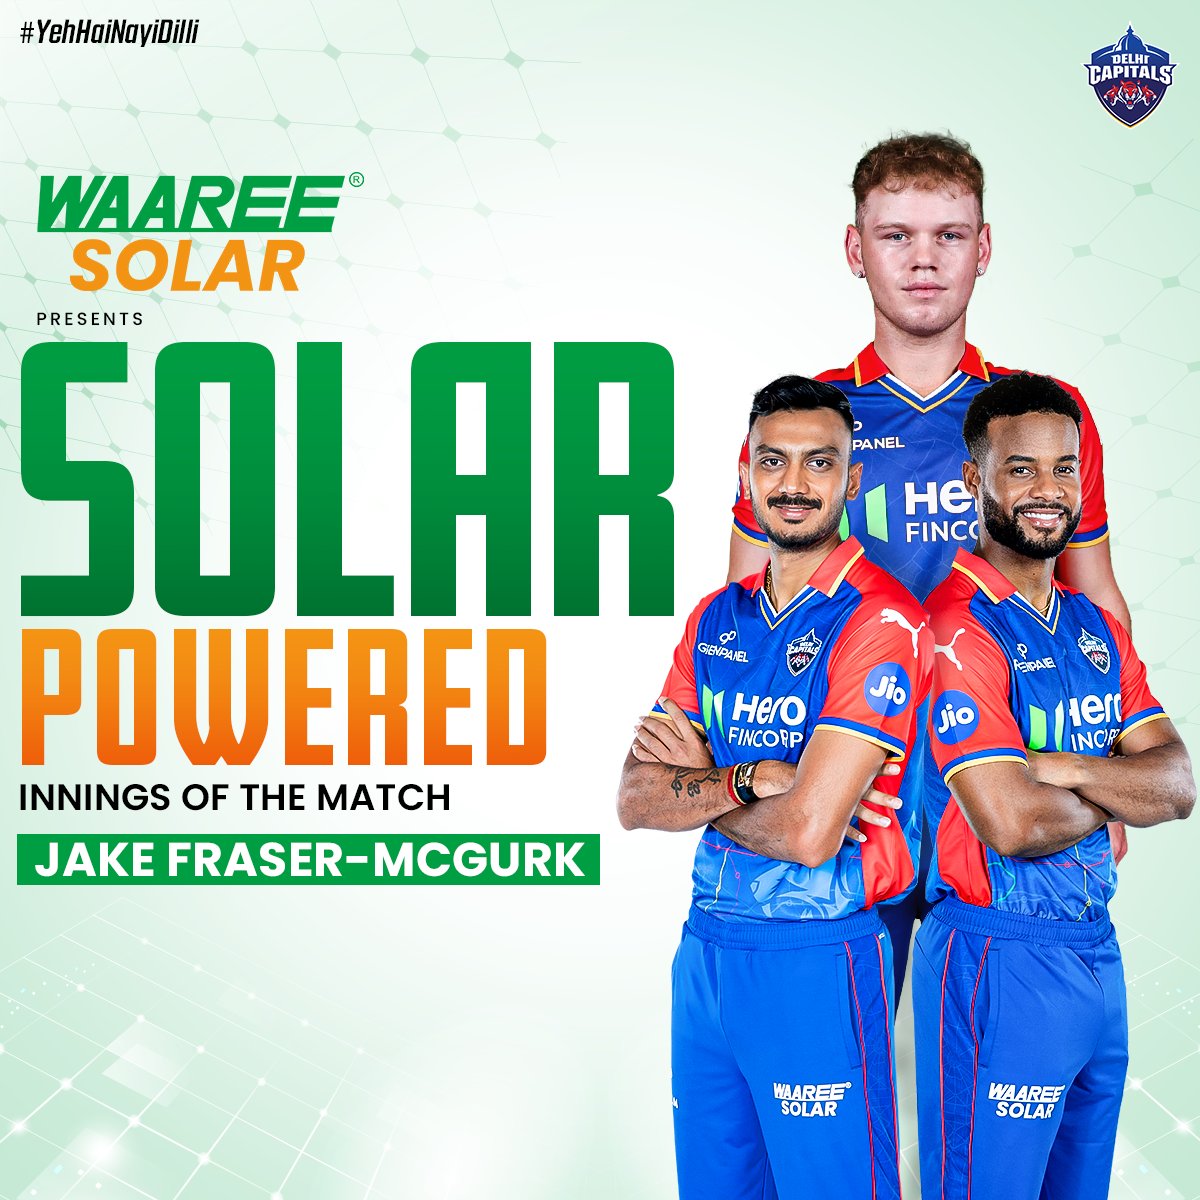 Jake Fraser-McGurk's quickfire innings was adjudged the @waareegroup Solar-Powered Innings of the Match 💯 #WaareeSolar